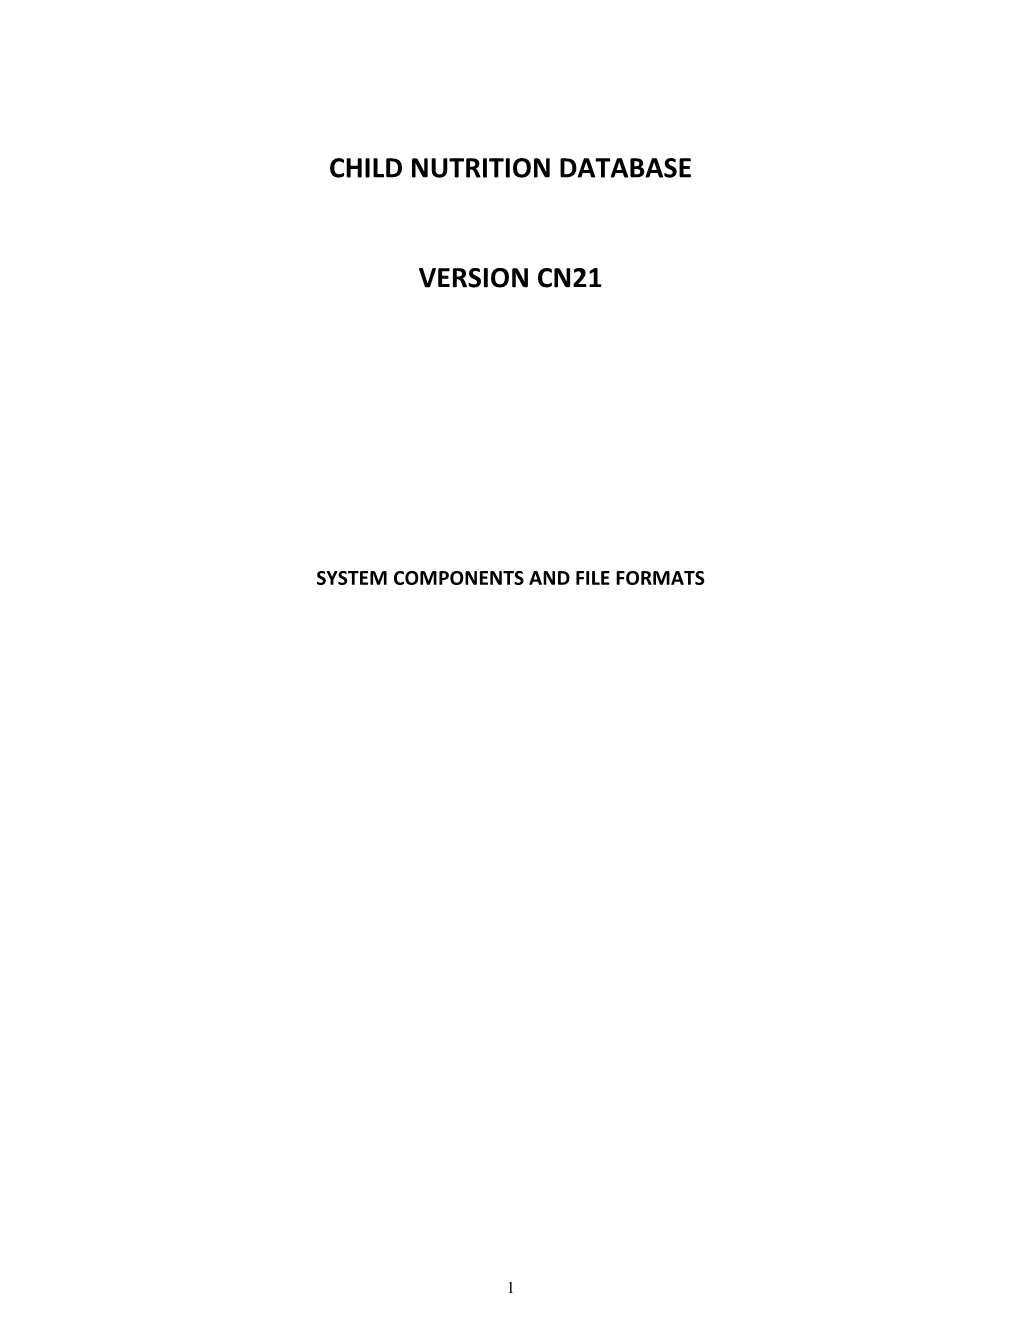 Child Nutrition Database (CN13)